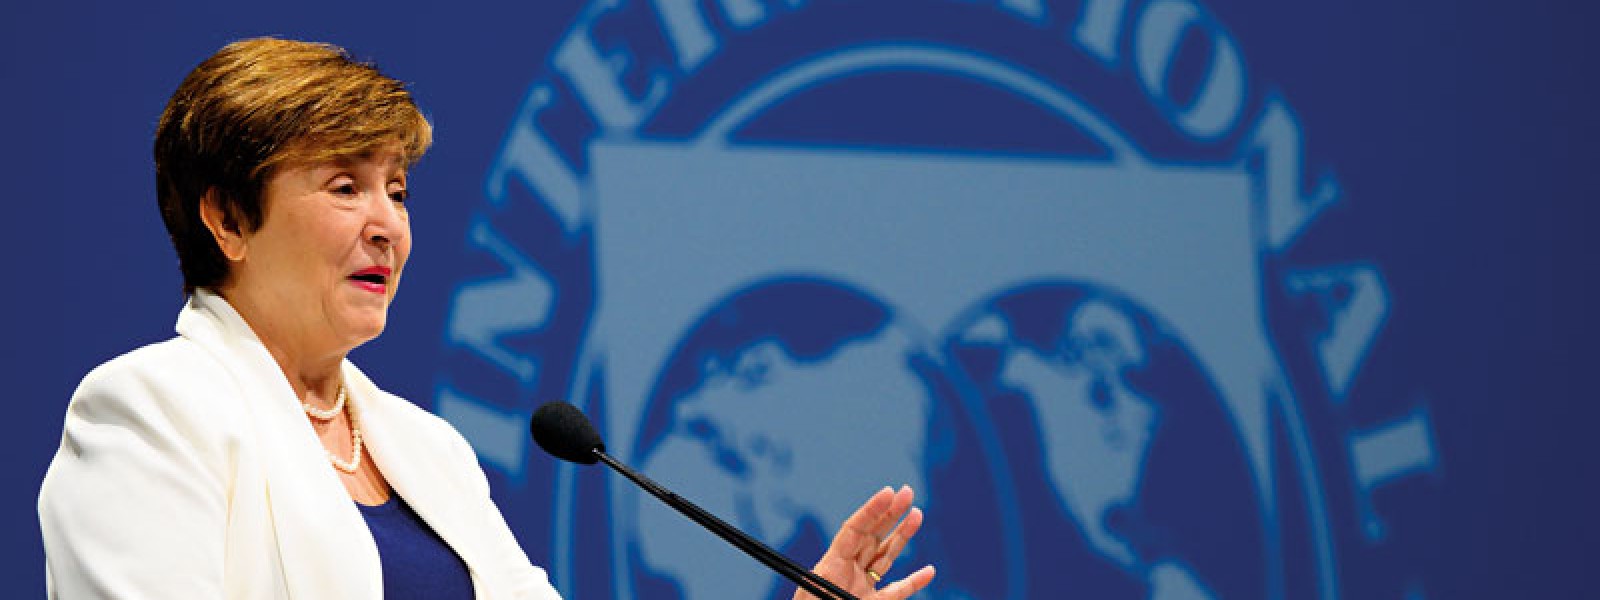 Sri Lanka is a warning sign : IMF Chief